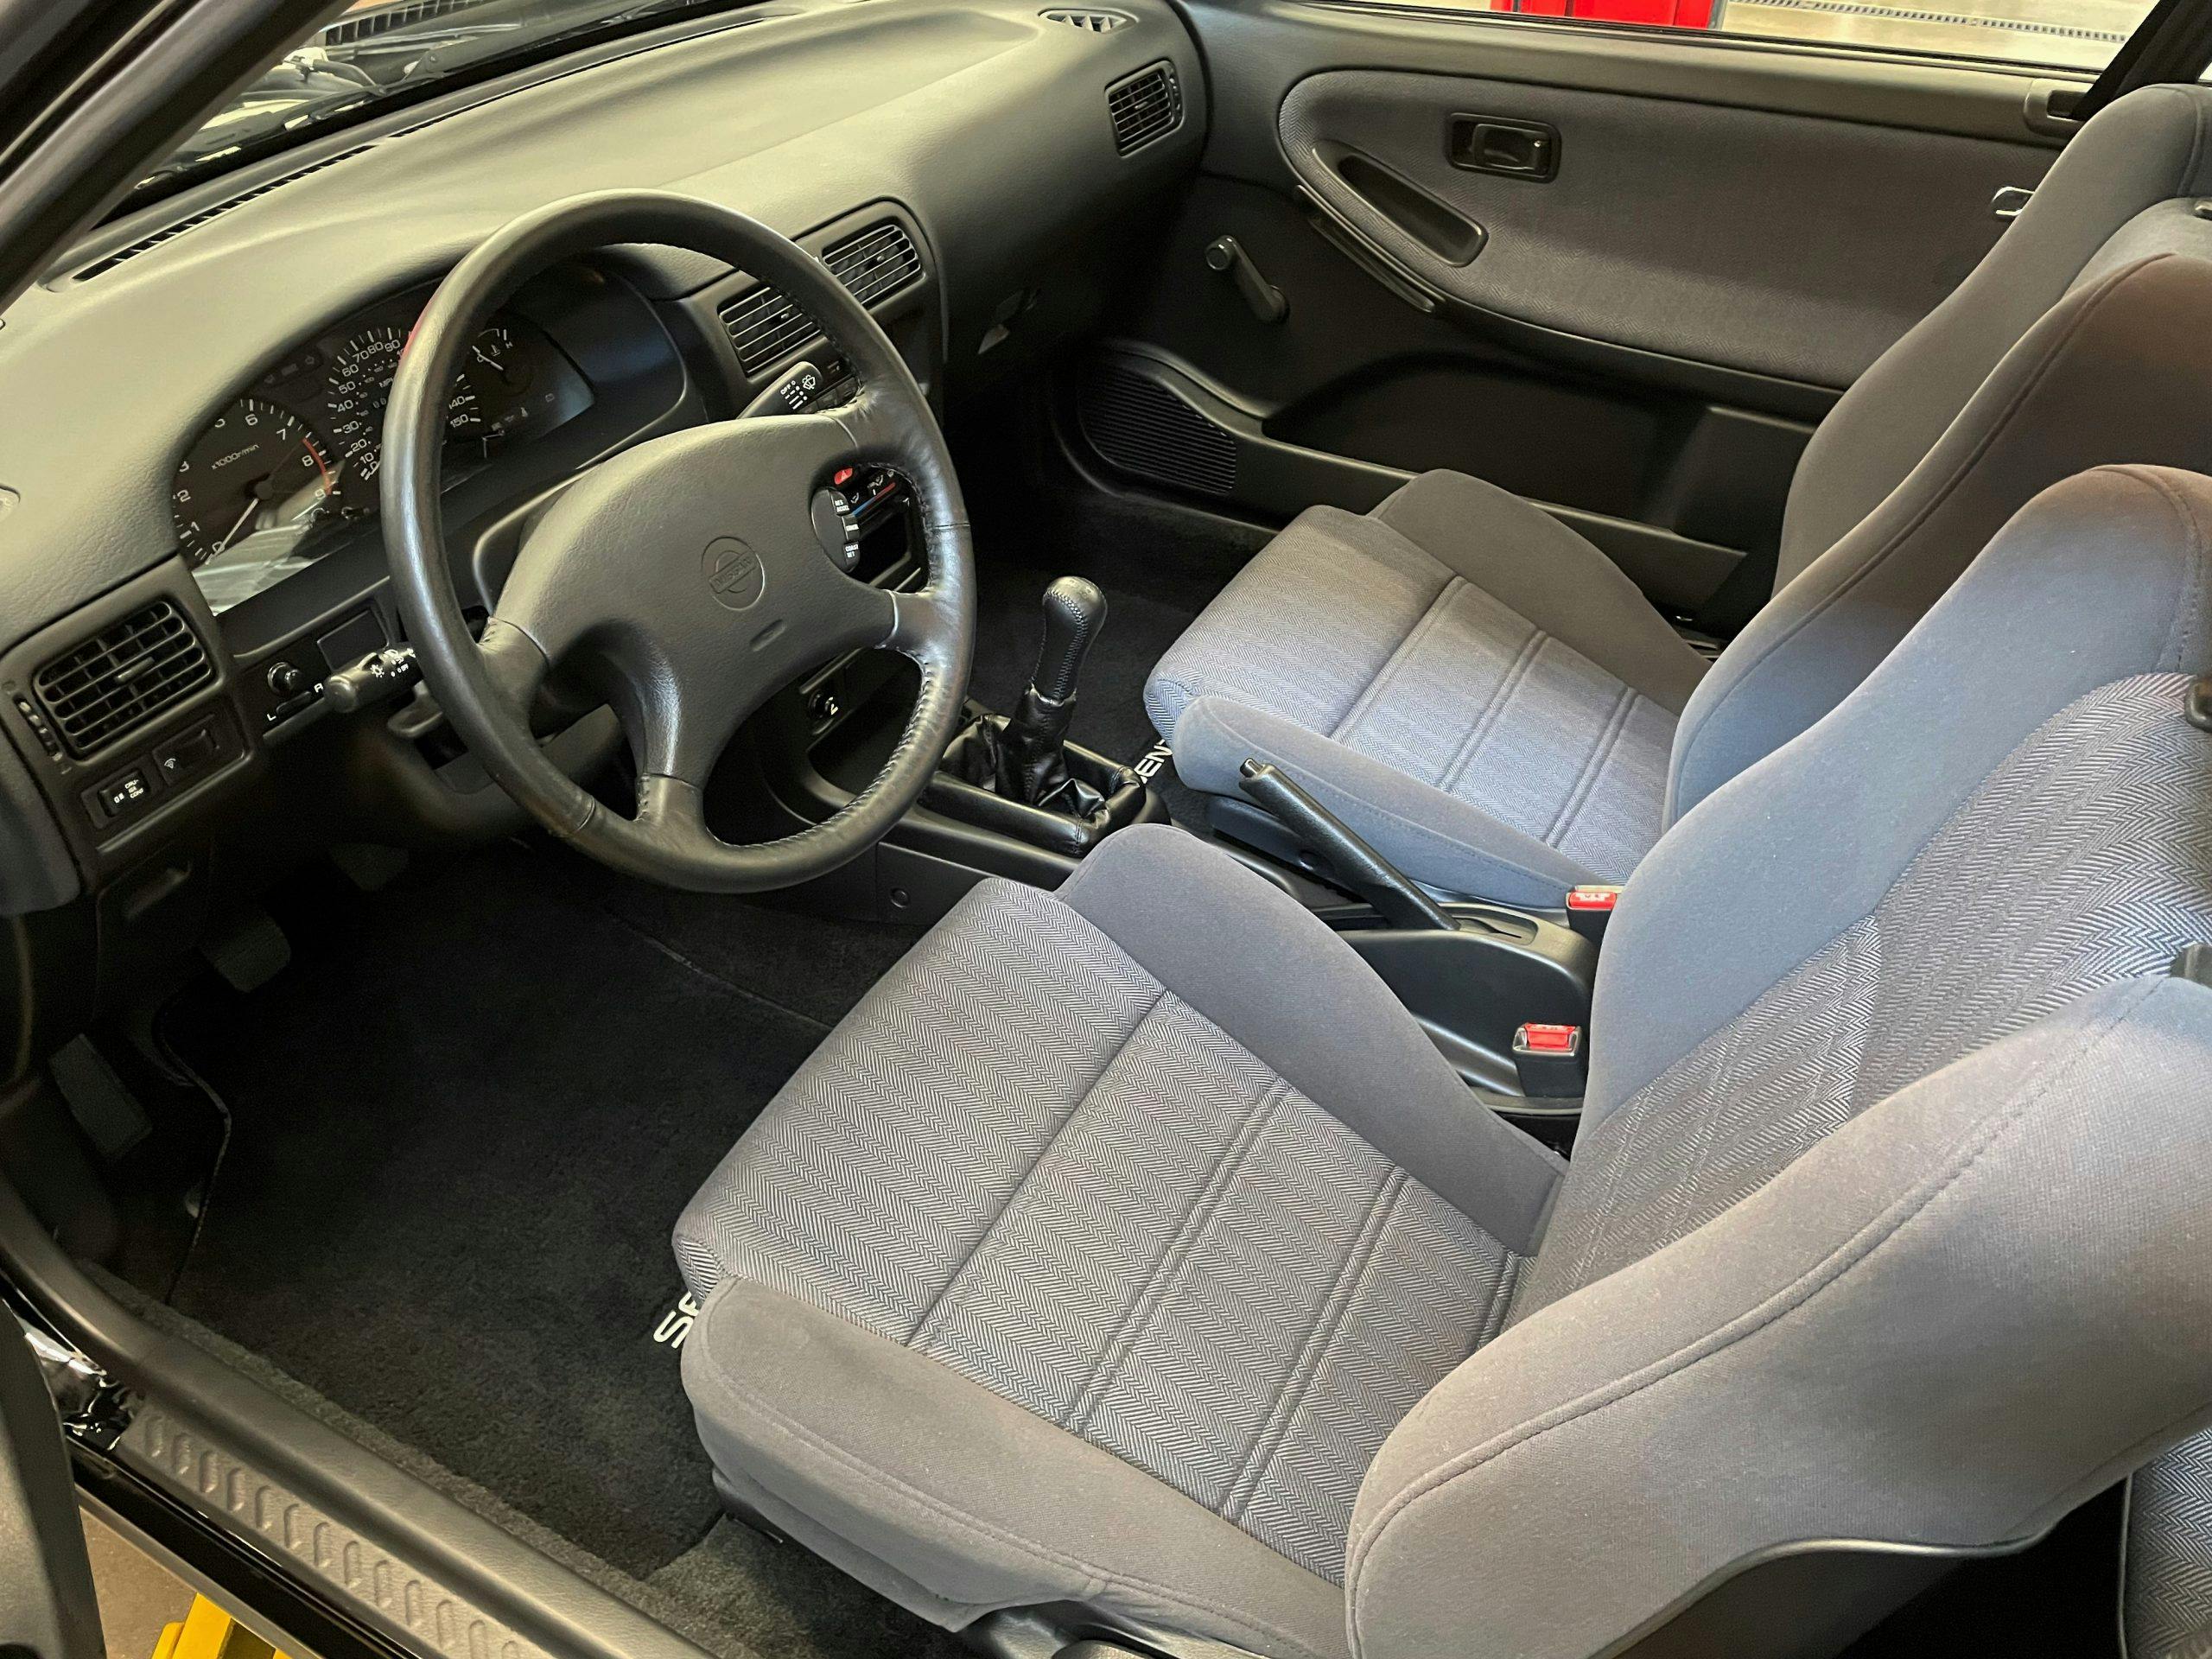 1992 Nissan Sentra SE-R interior seats